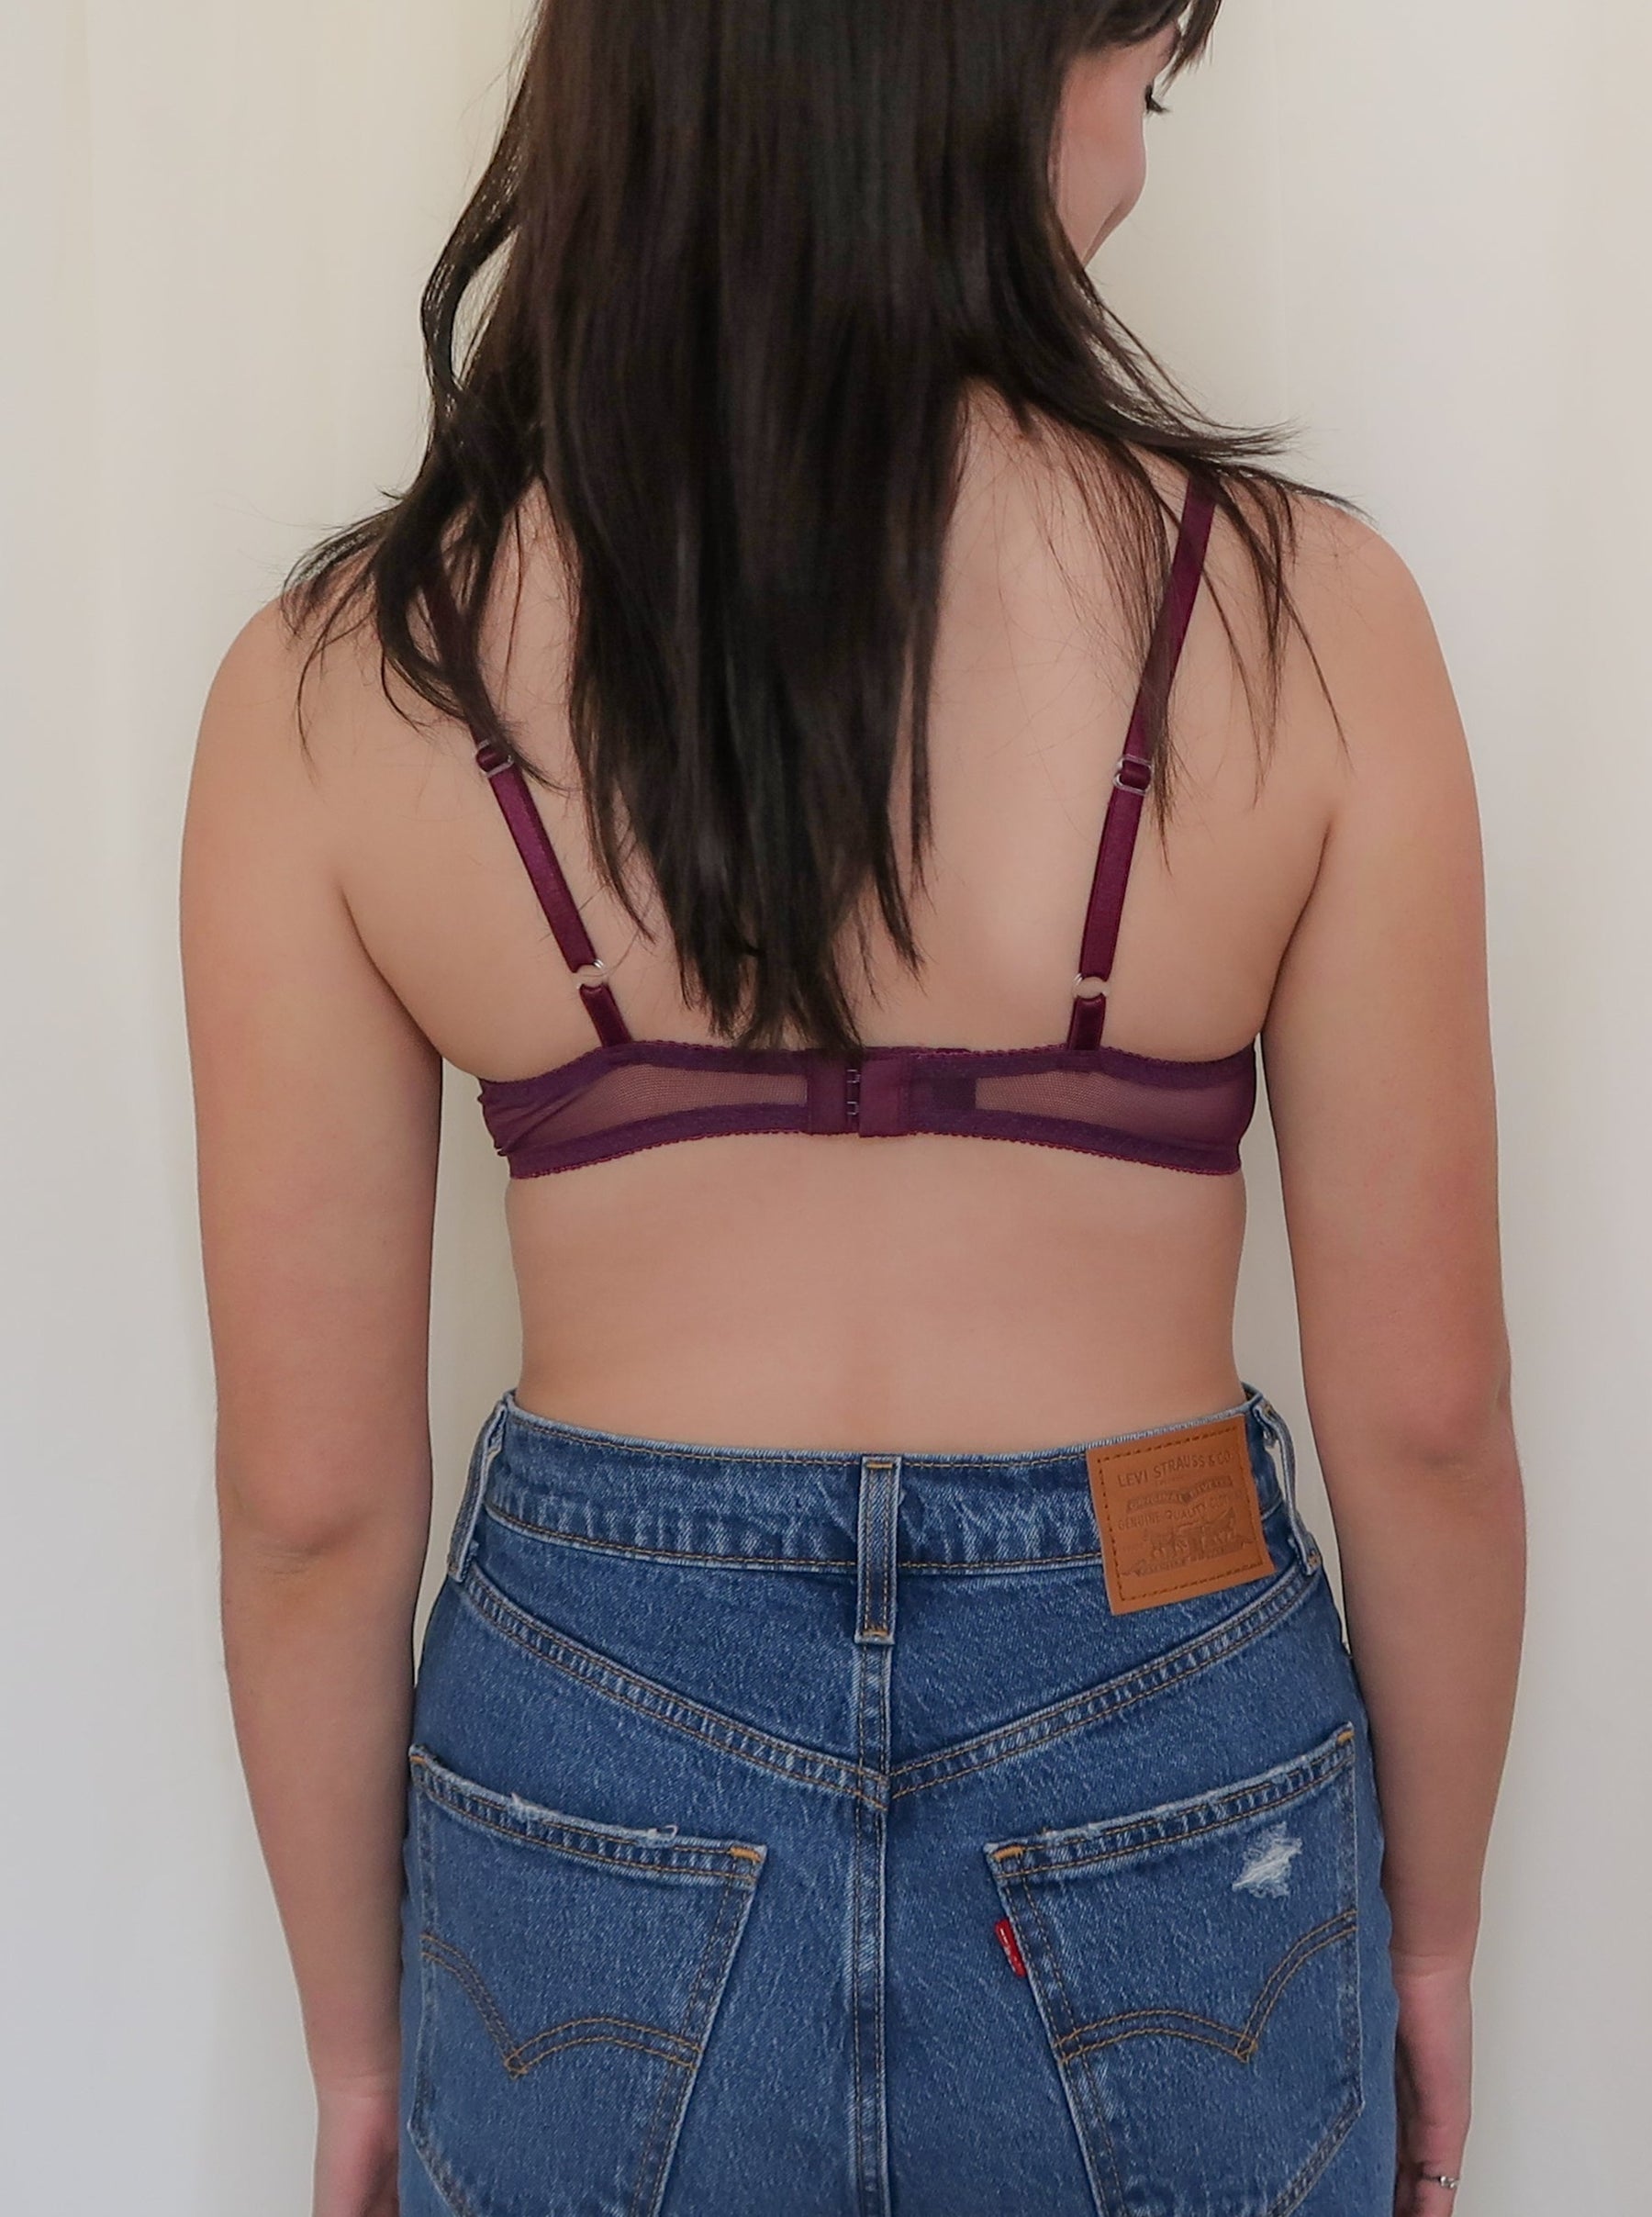 Victoria secret bra 34B / 36A, Women's Fashion, New Undergarments